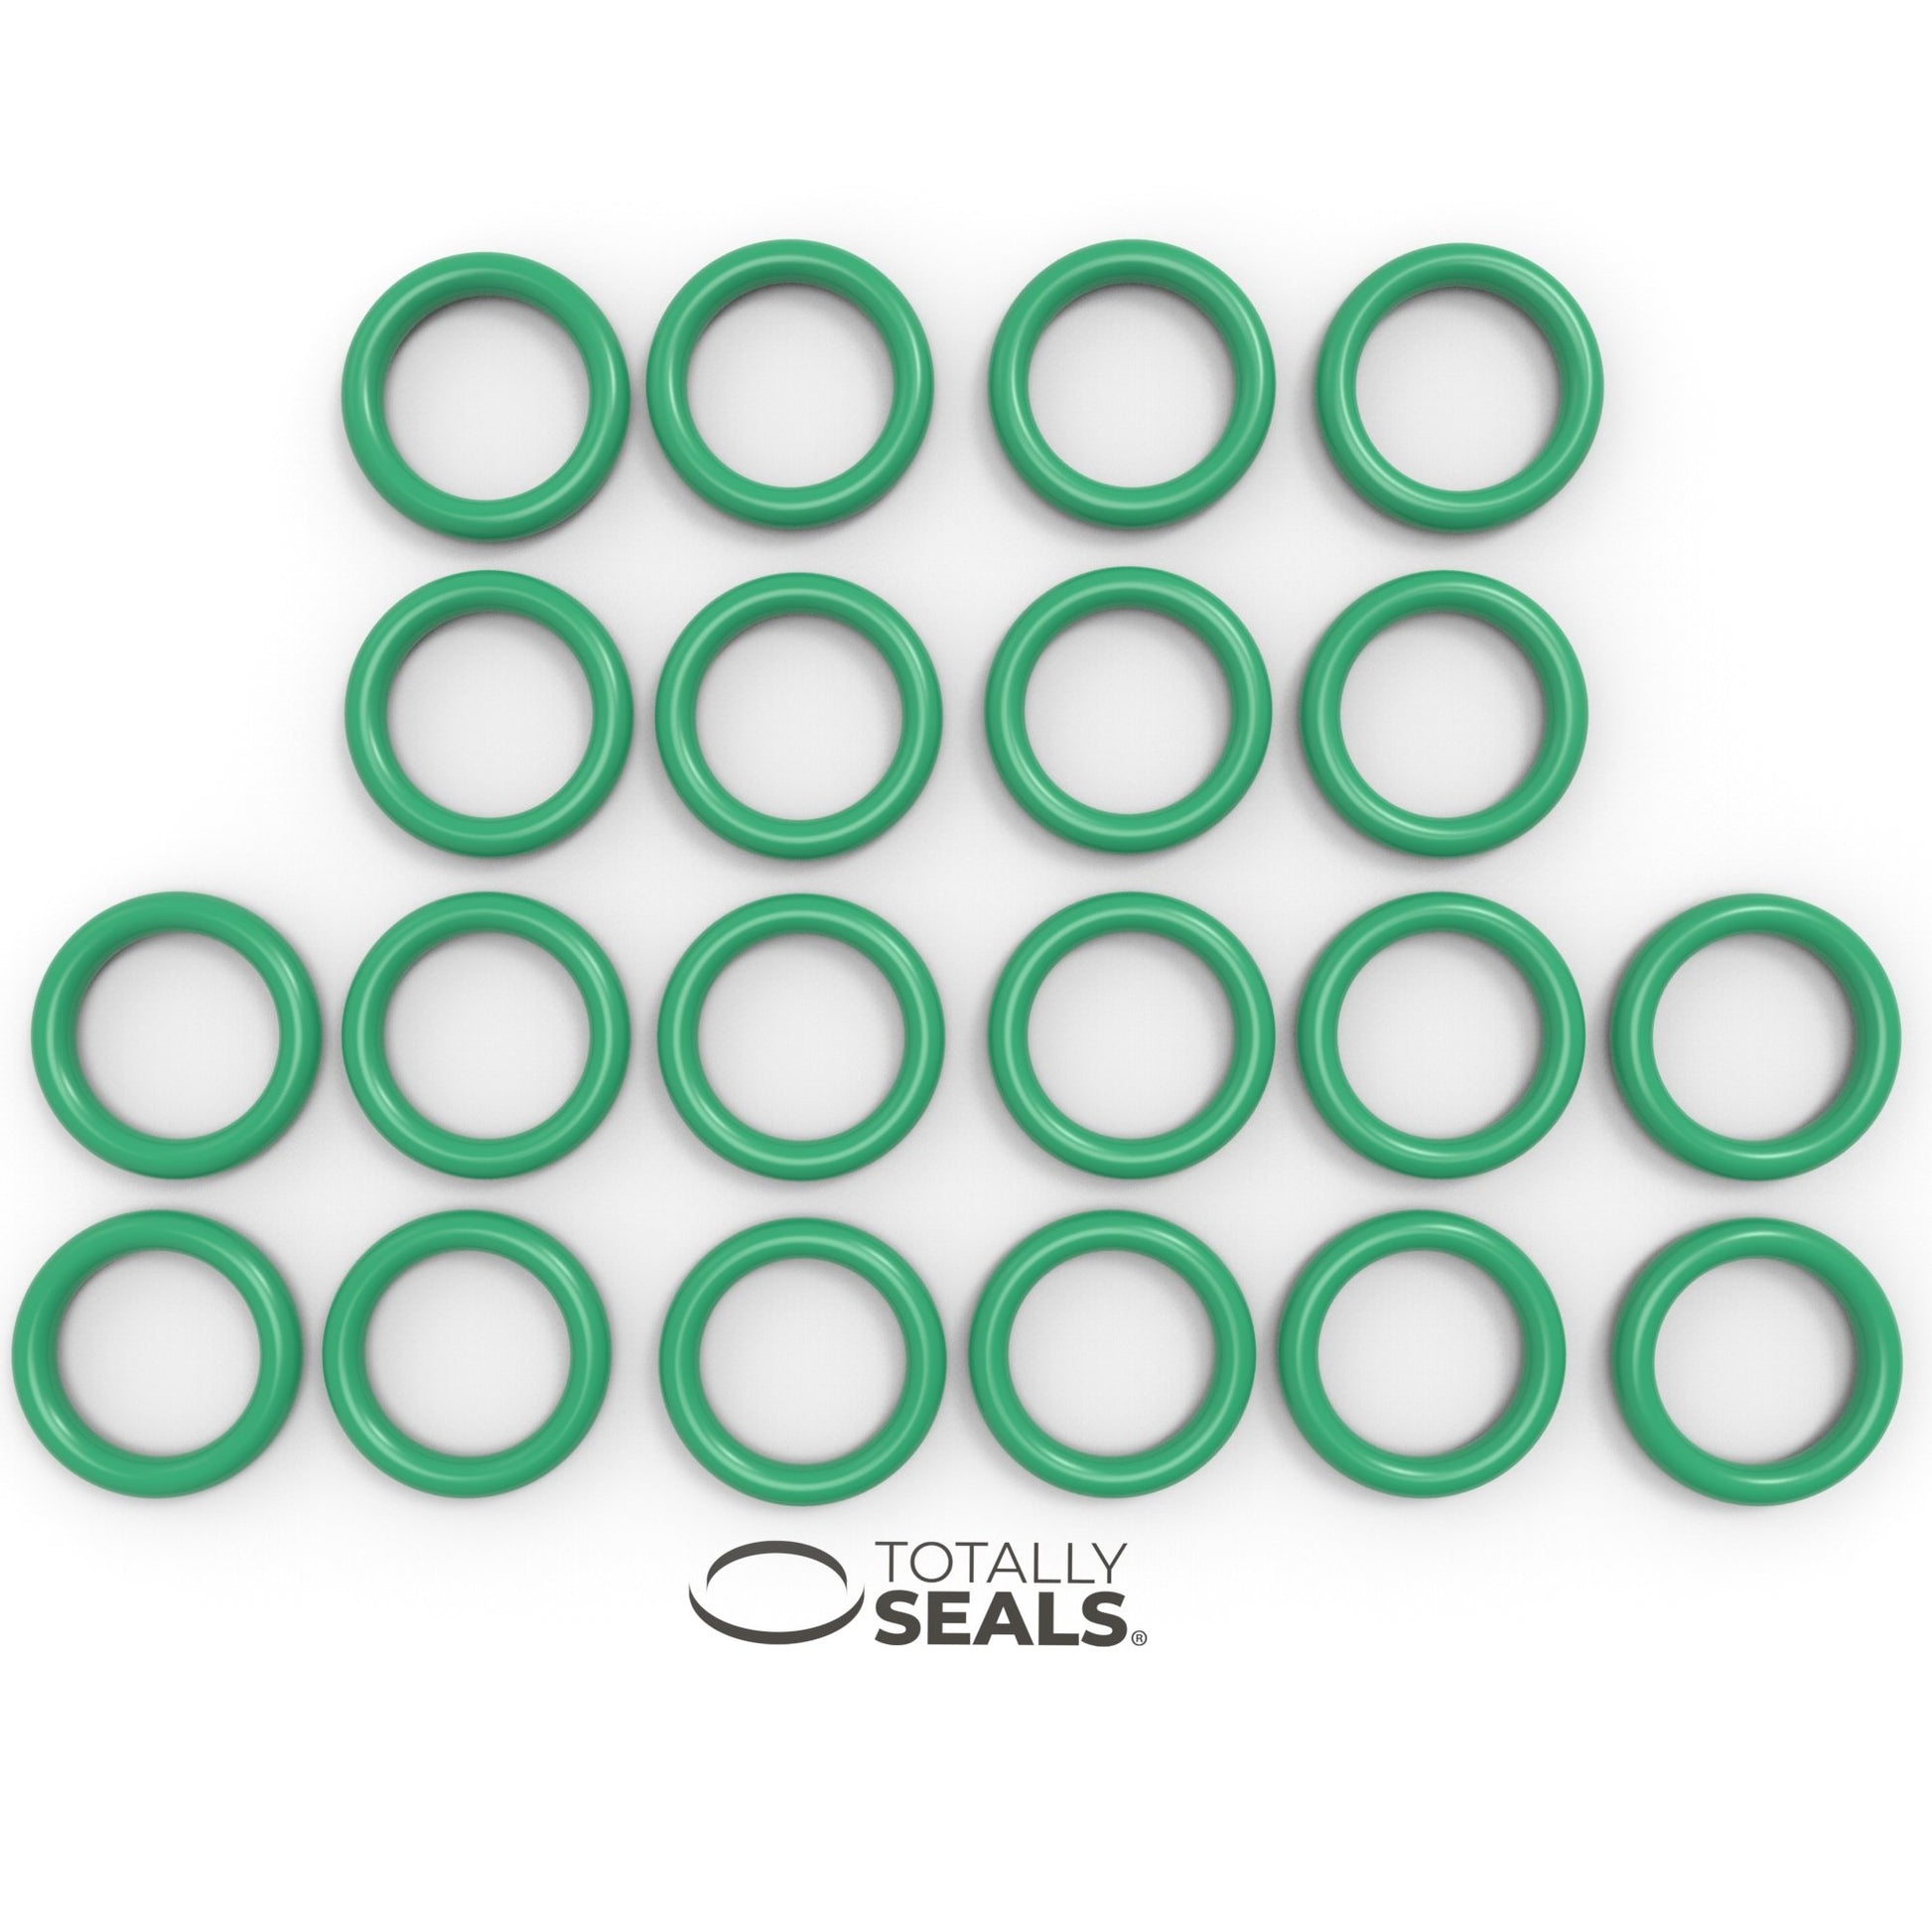 7mm x 3mm (13mm OD) FKM (Viton™) O-Rings - Totally Seals®